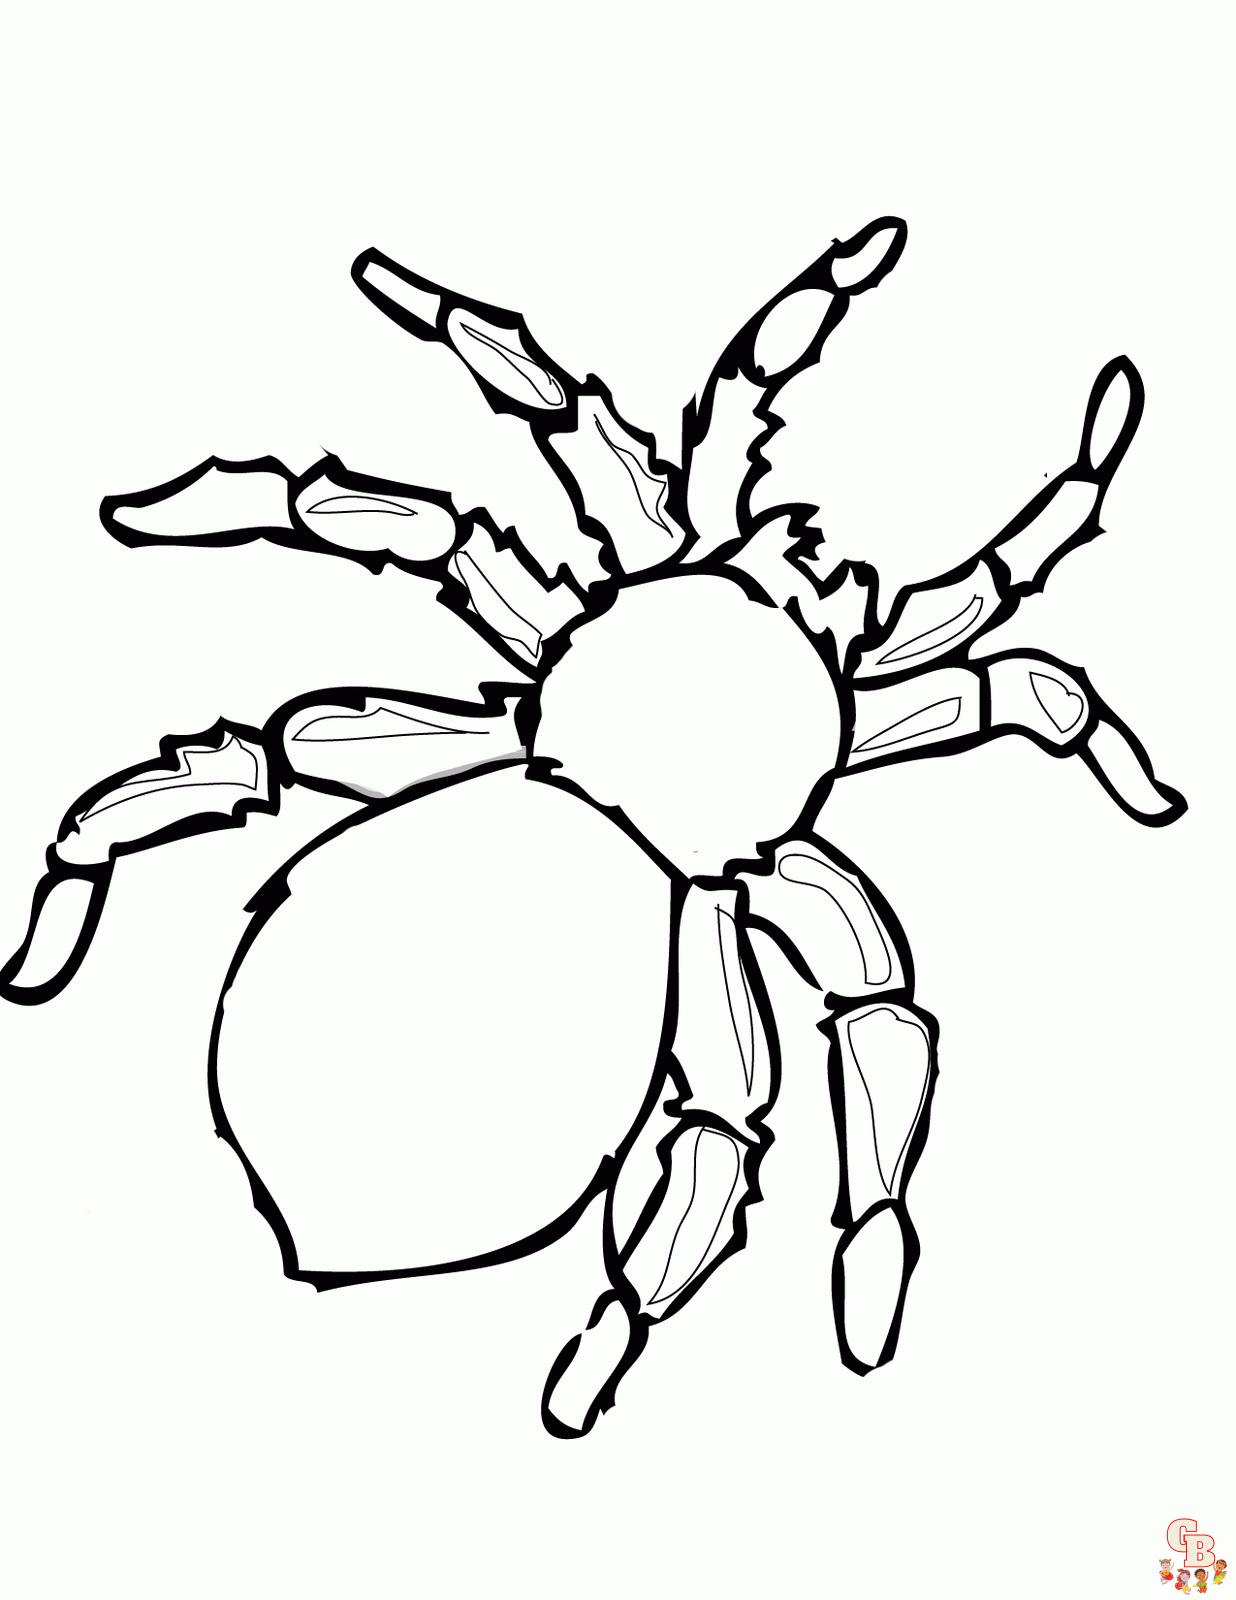 como dibujar una araña facil para niños  Dibujos faciles  YouTube